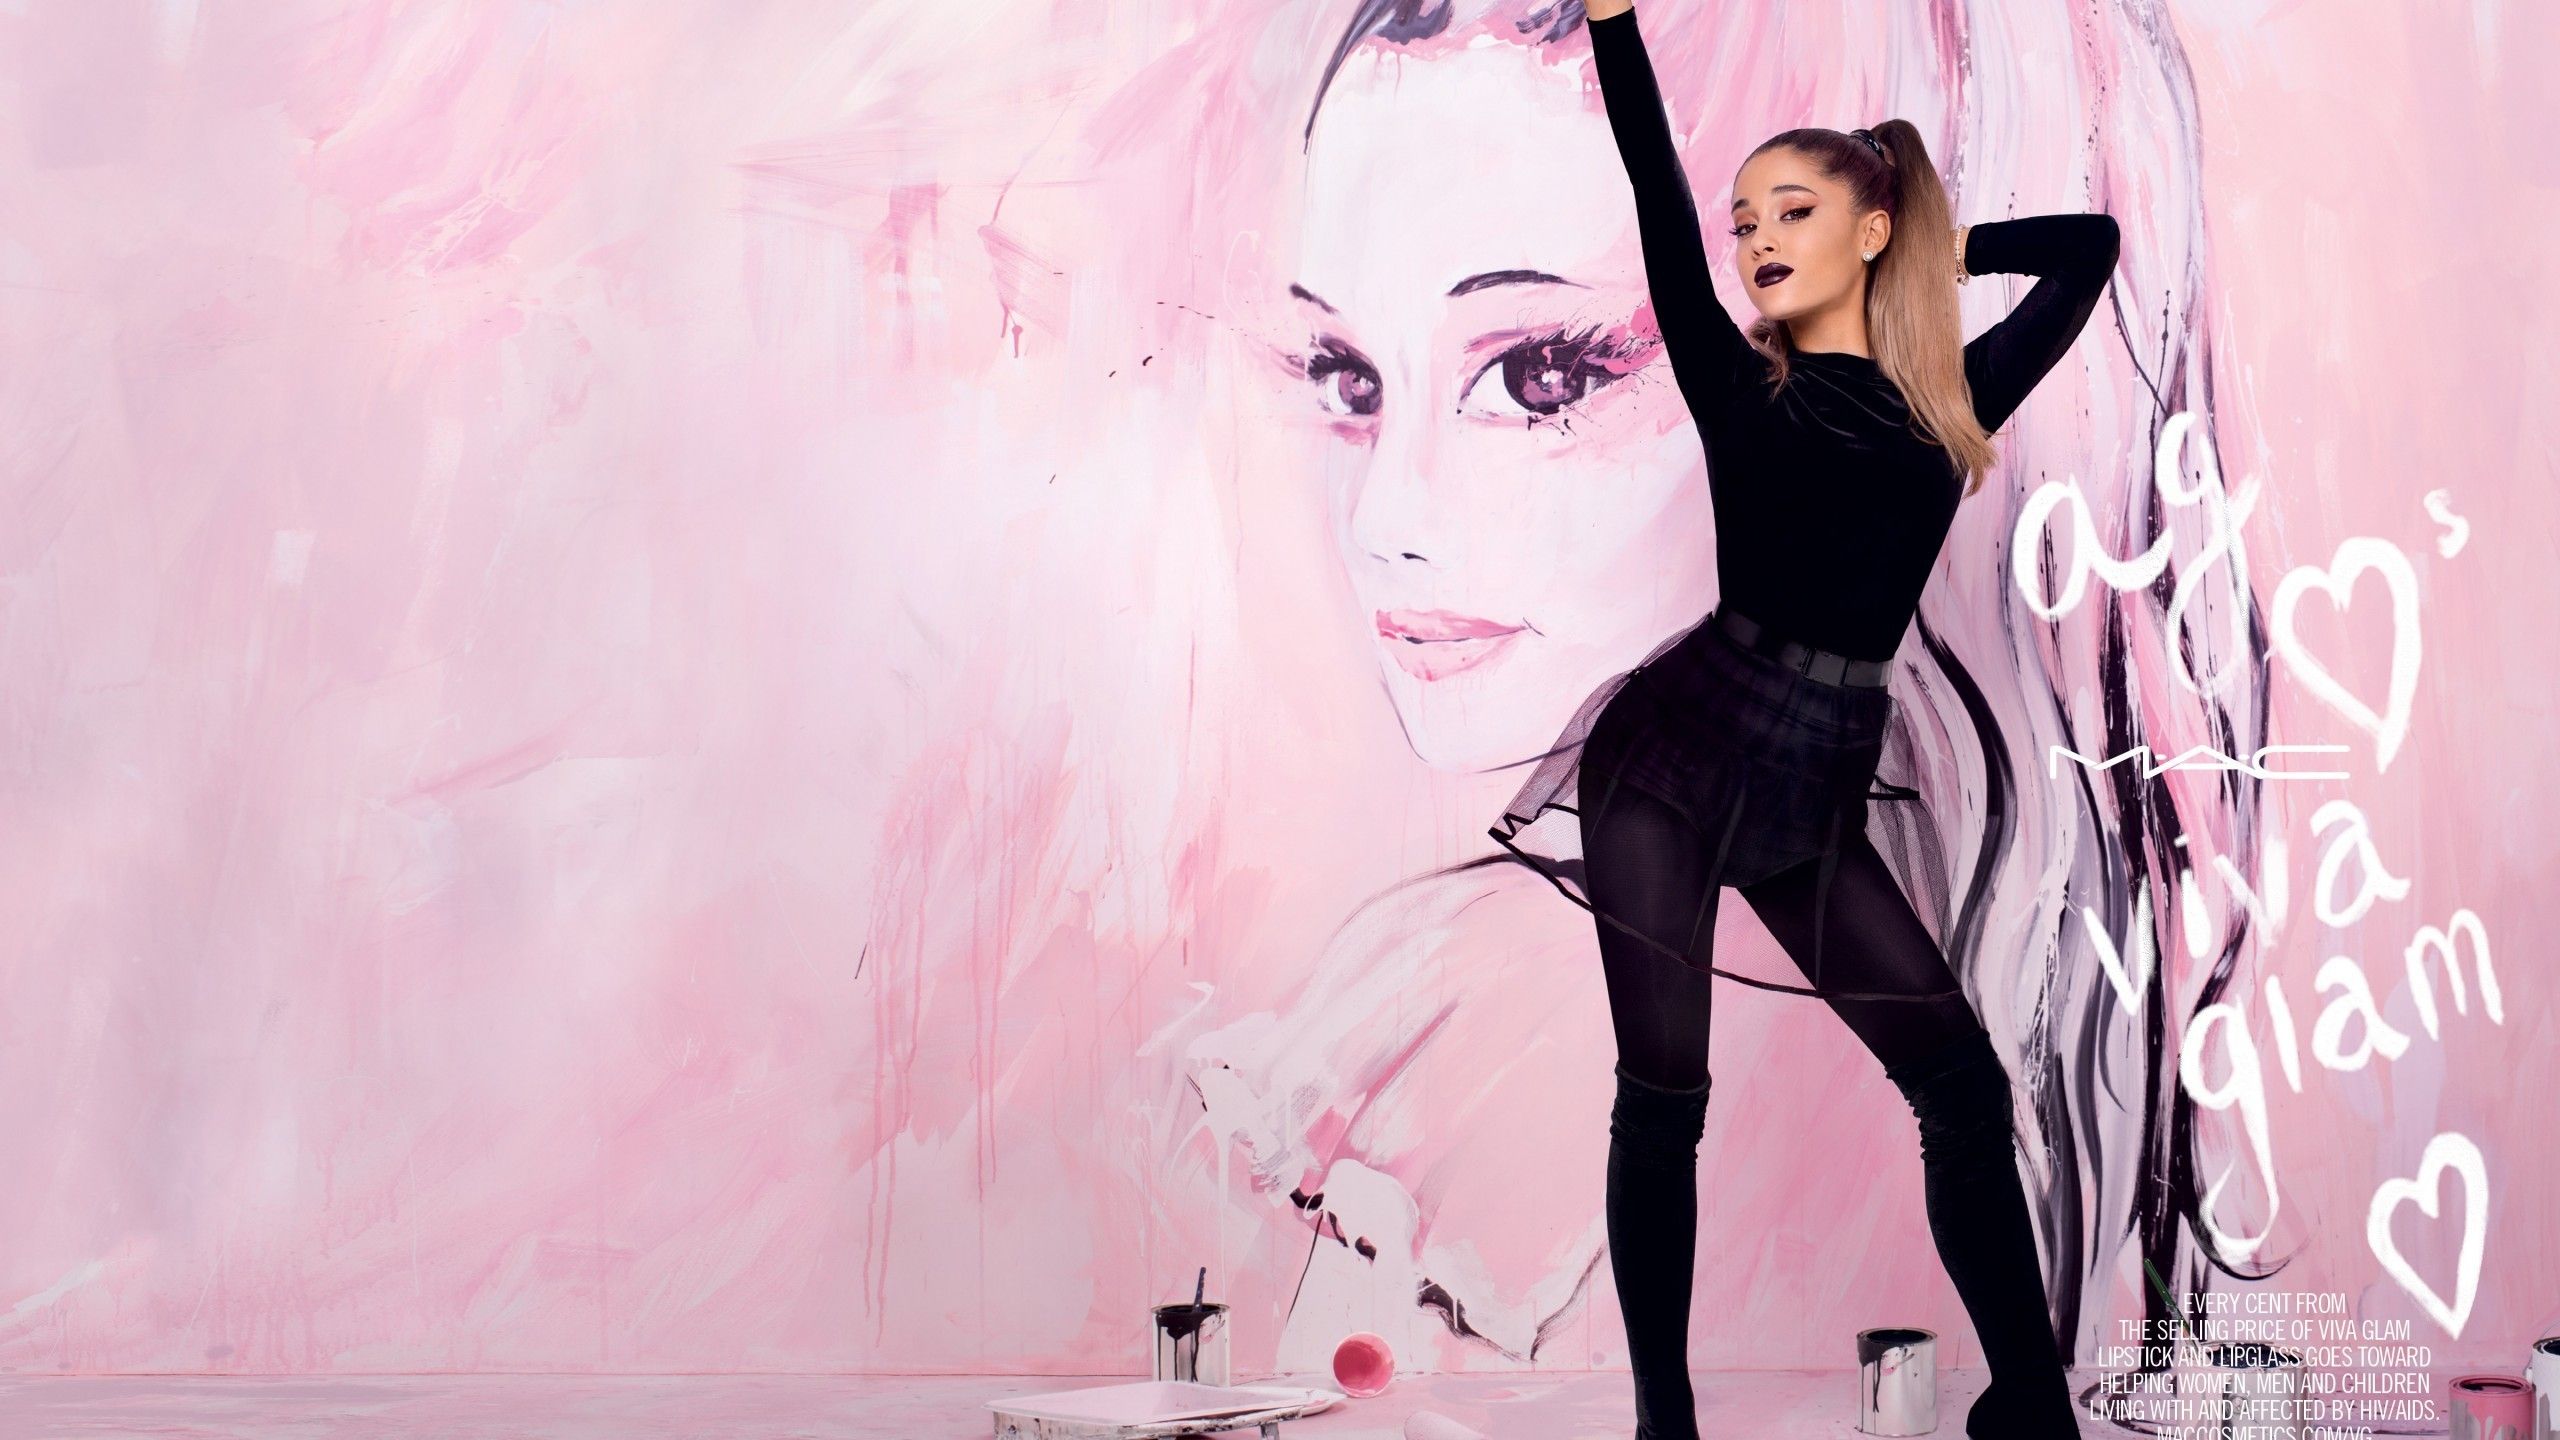 Ariana Grande 2018 Wallpaper background picture